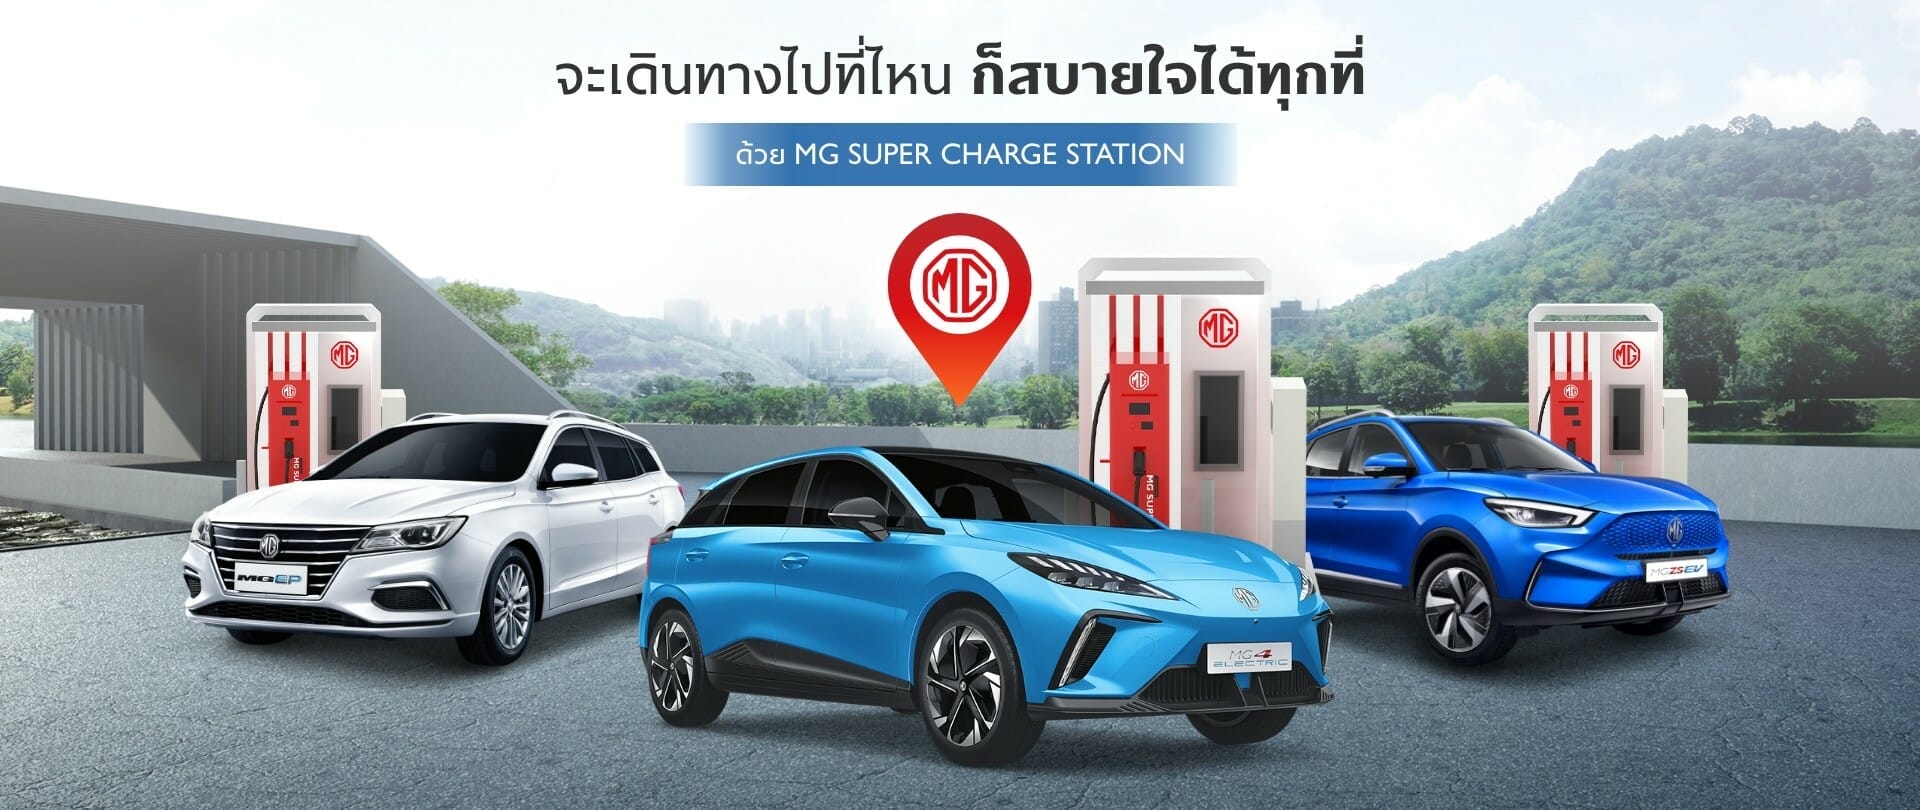 MG Charging Stations - KV